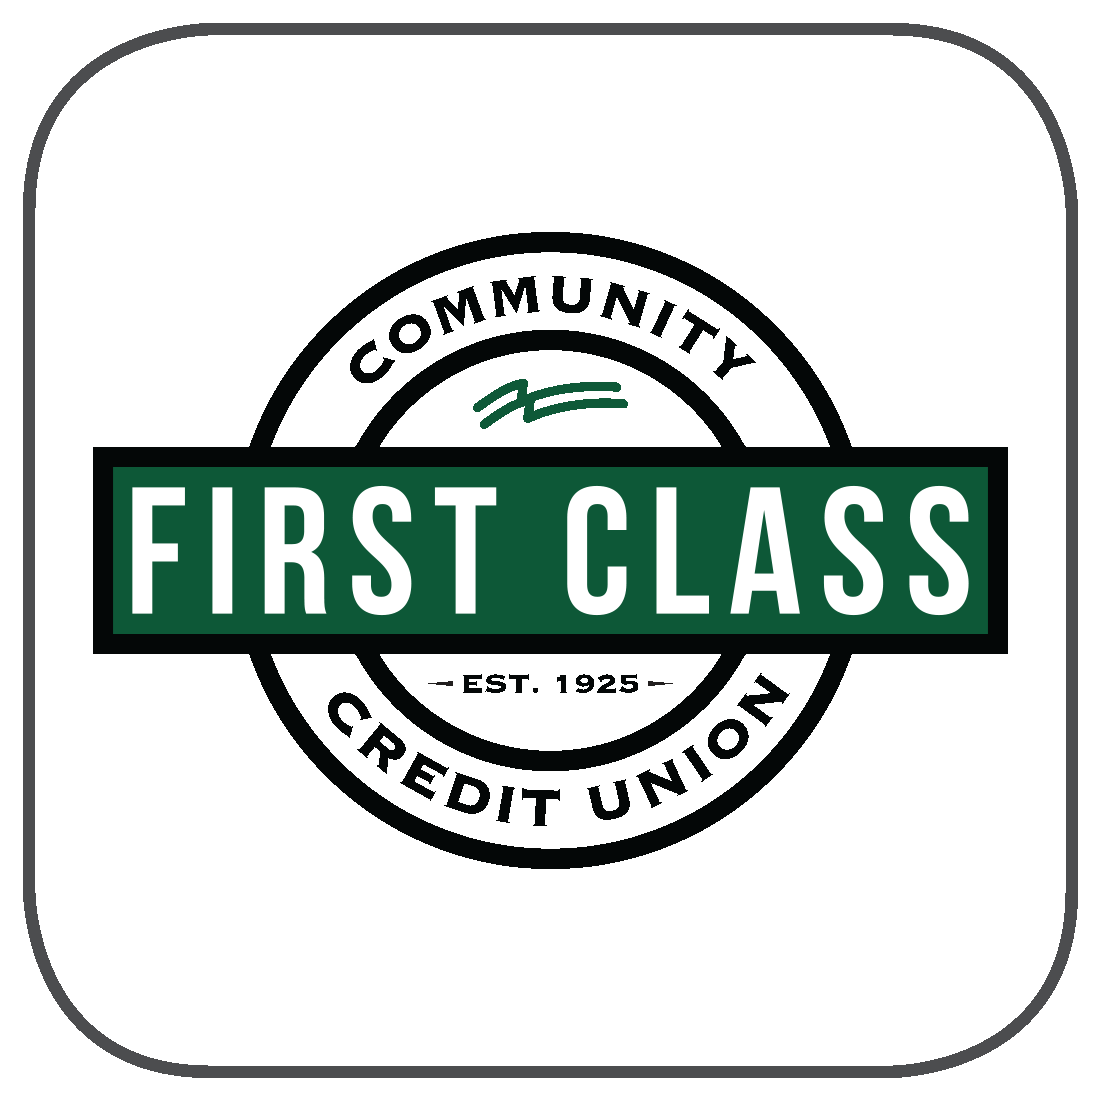 First Class Community Credit Union logo